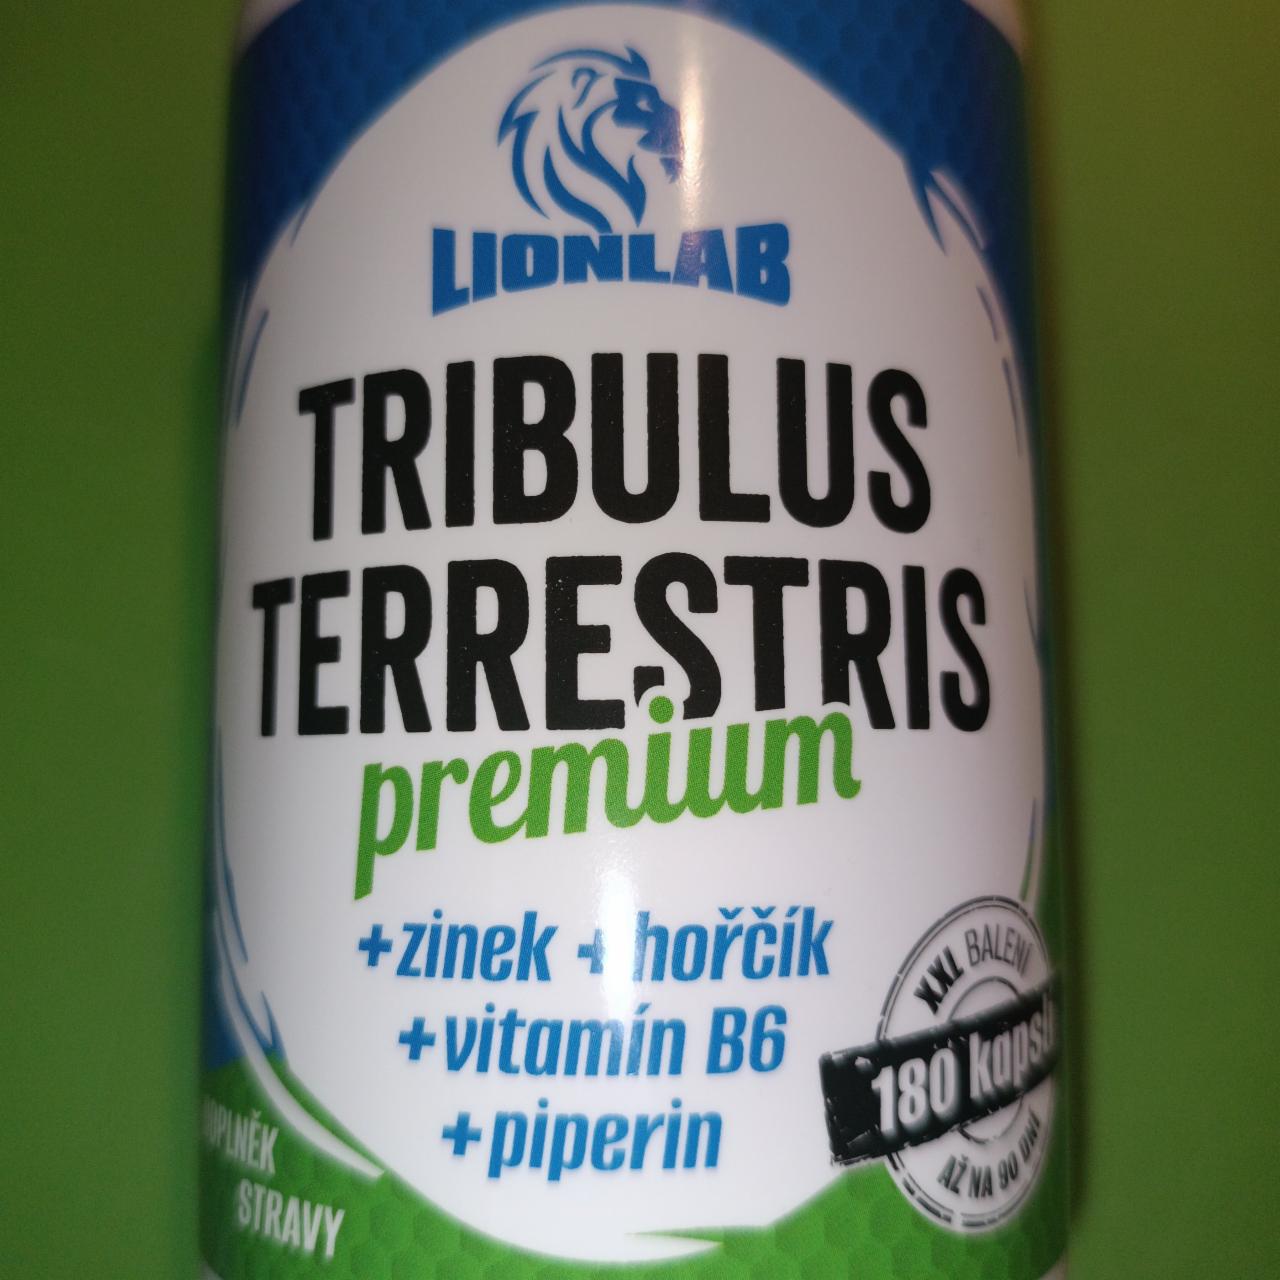 Fotografie - Tribulus Terrestris premium + zinek, hořčík, vitamín B6, piperin Lionlab